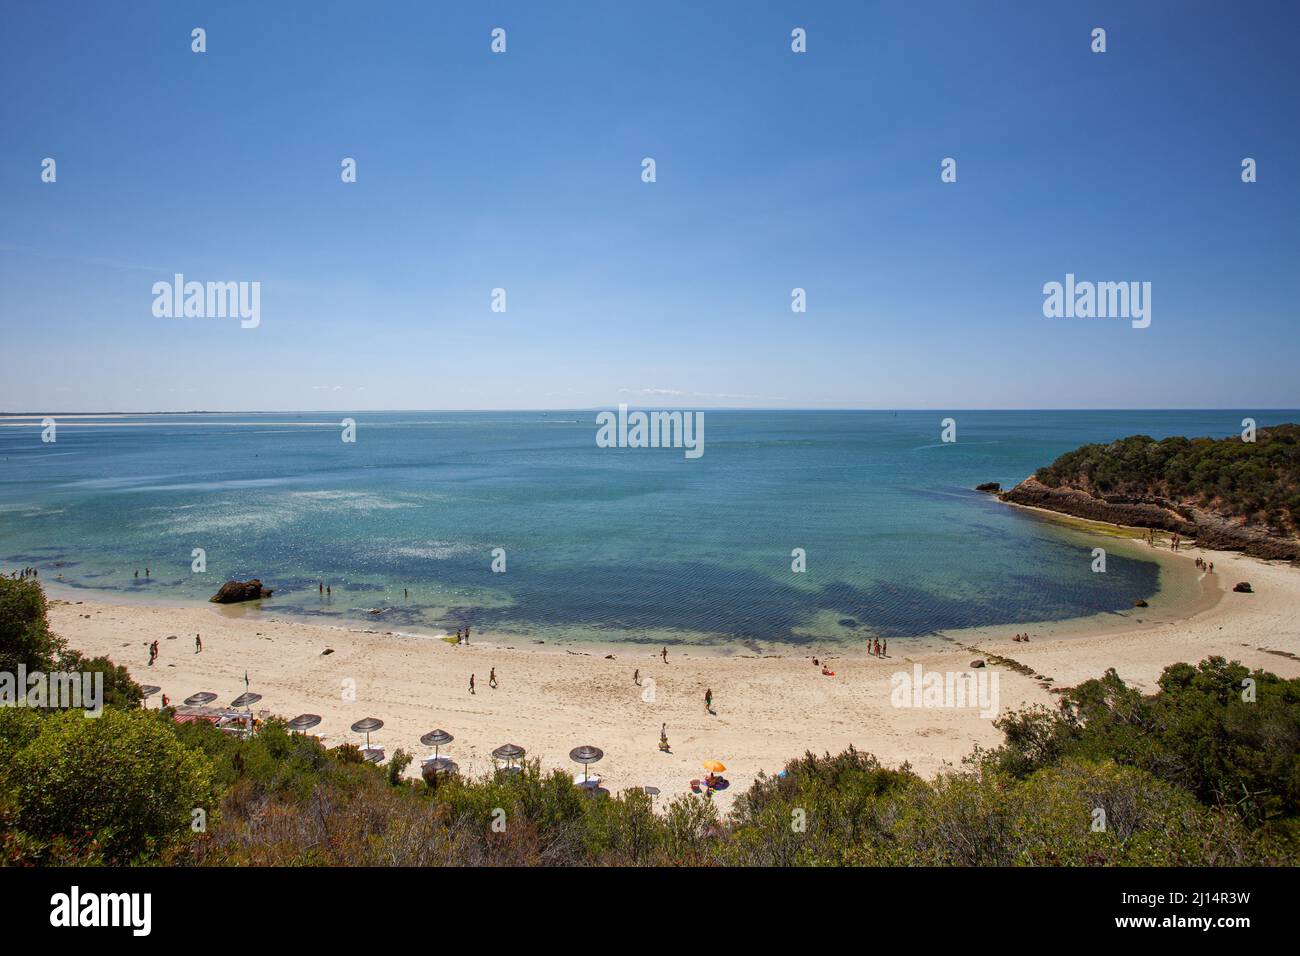 The beautiful Praia de Galapinhos, a remote beach located in the Parque Natural da Arrábida, a natural area south of Lisbon, Portugal Stock Photo